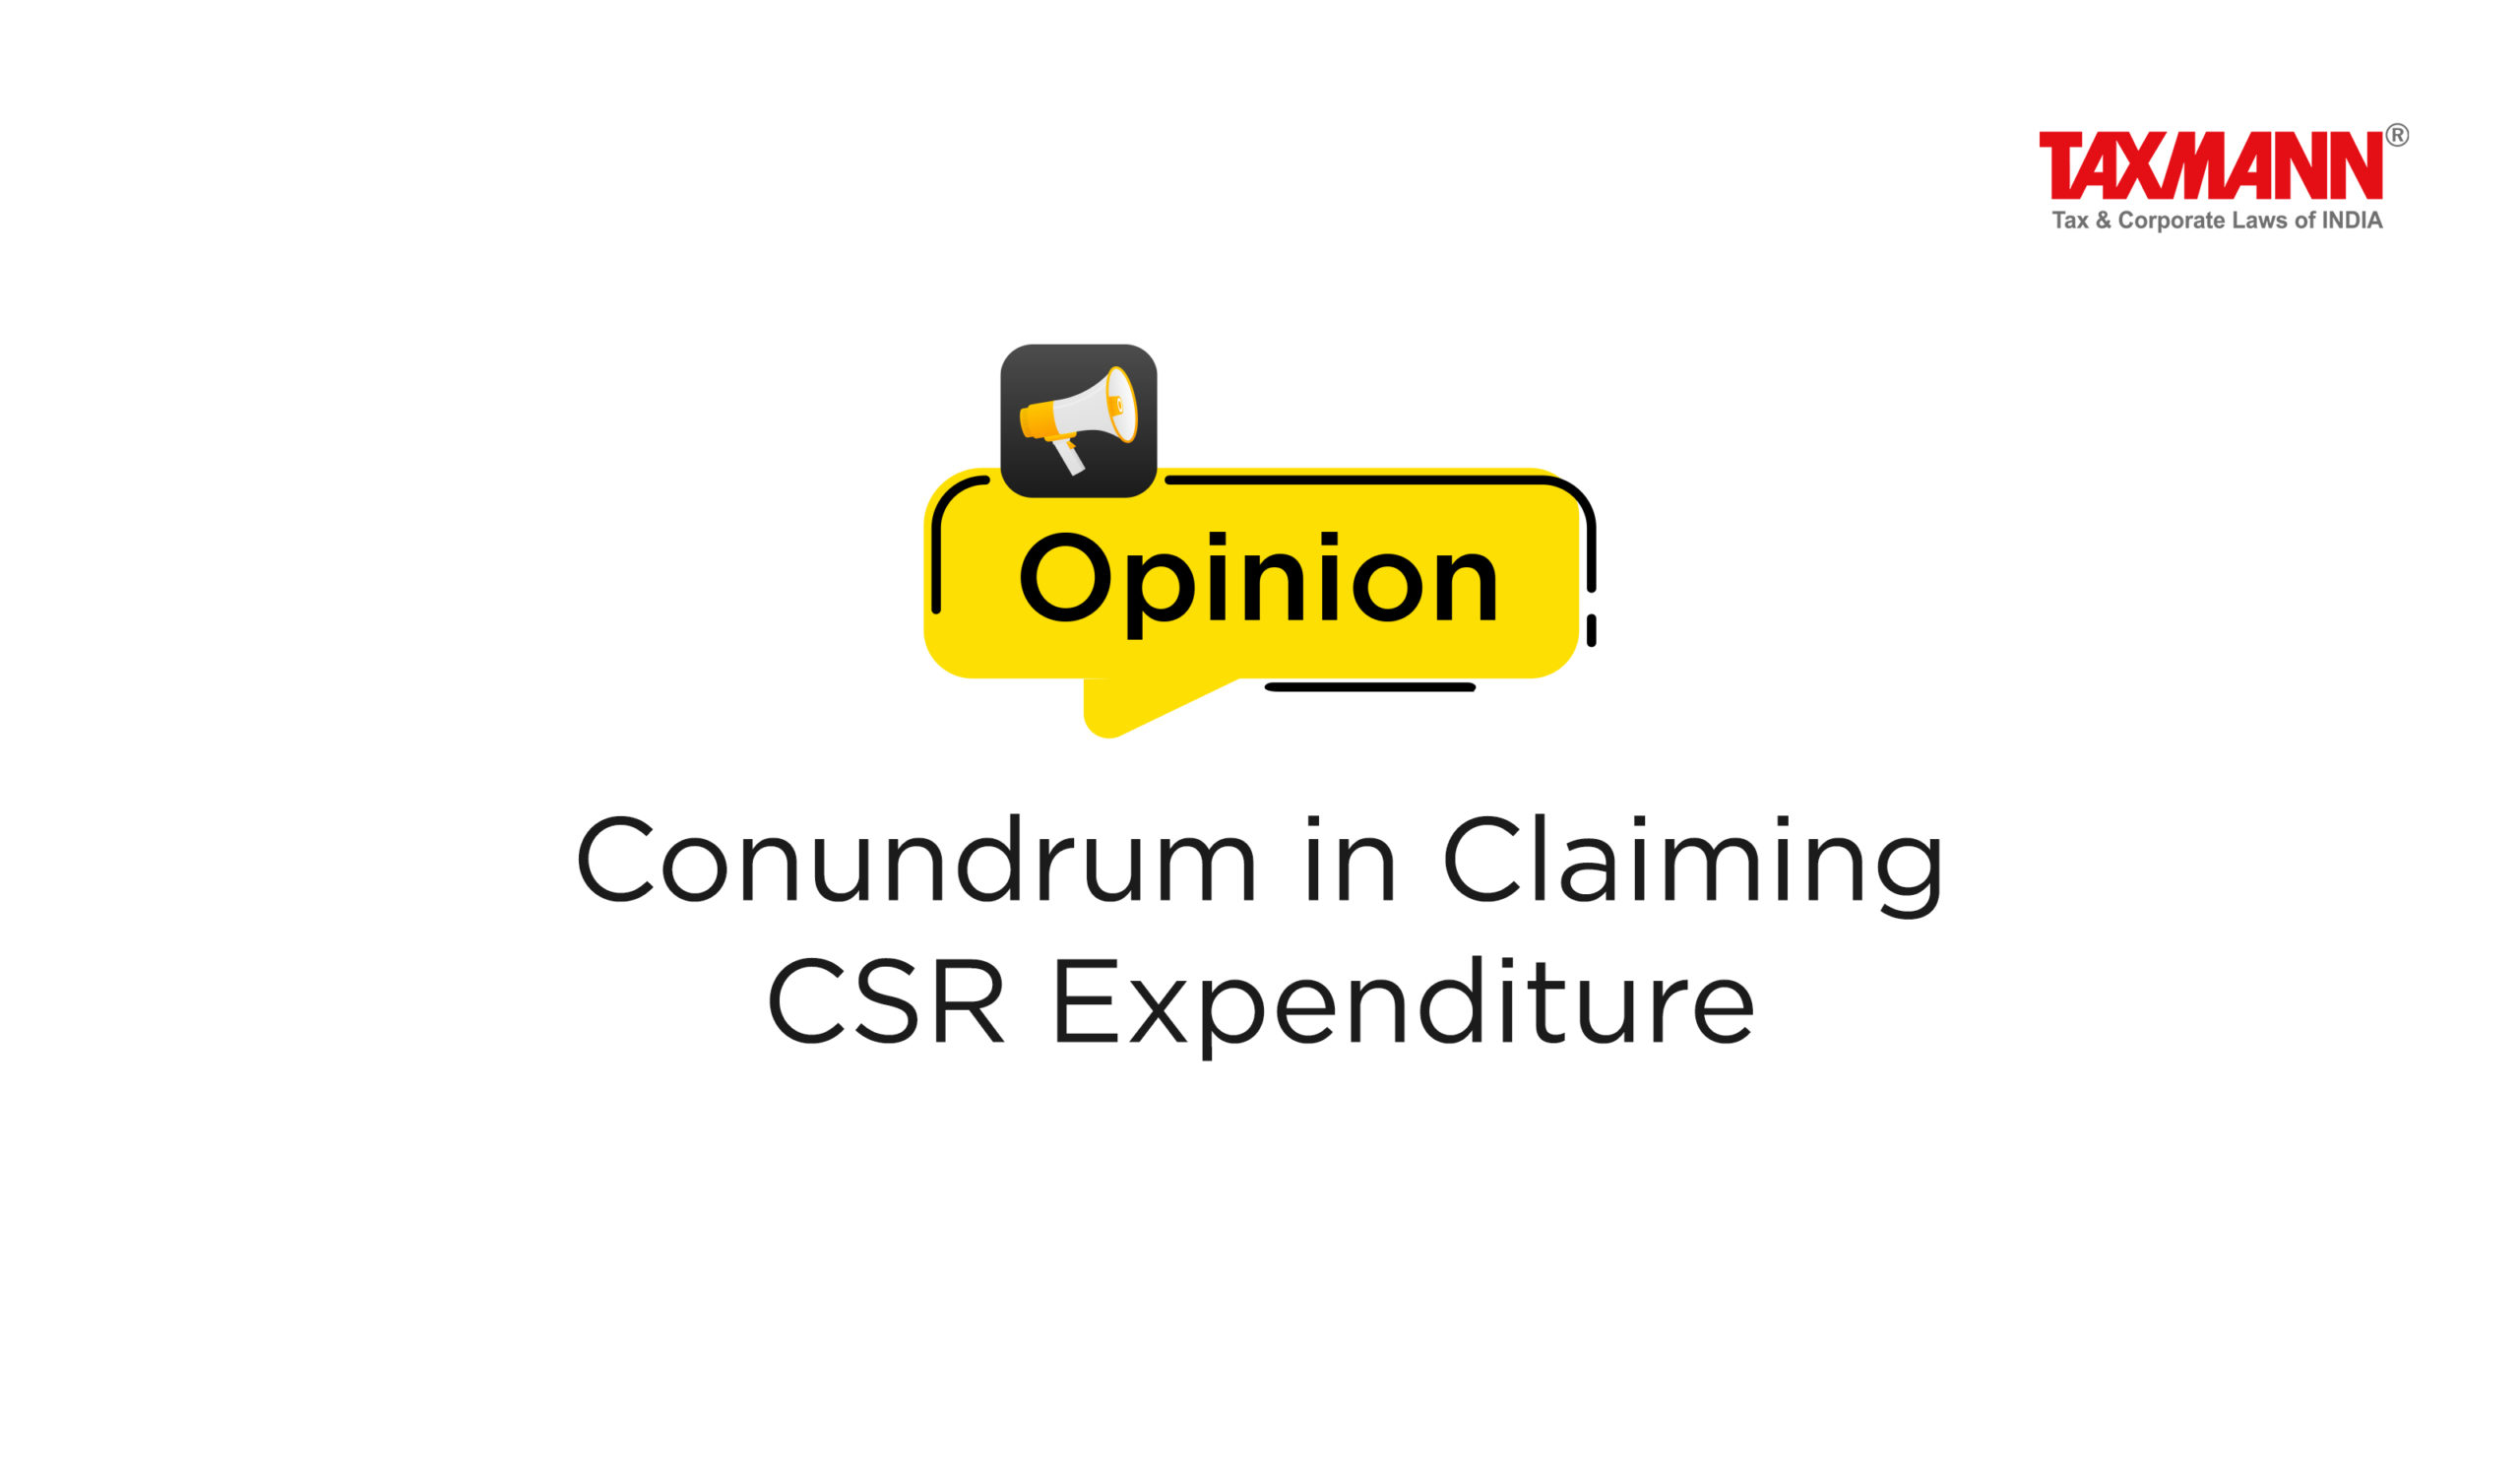 CSR expenditure